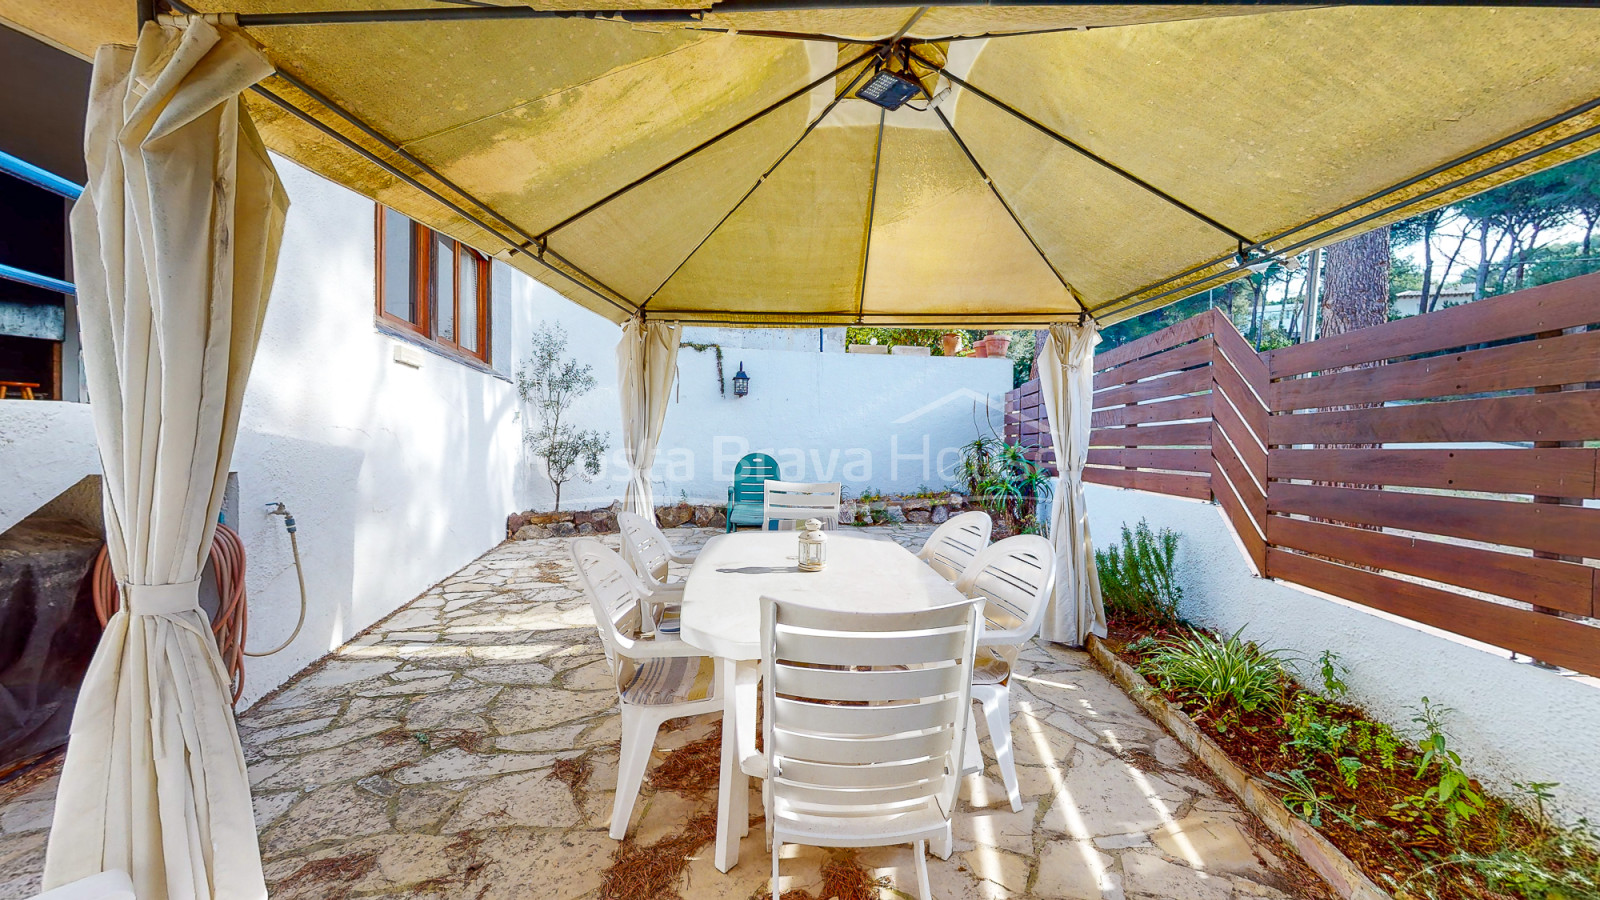 Mediterranean house with patio-garden 10 min walk from Tamariu beach